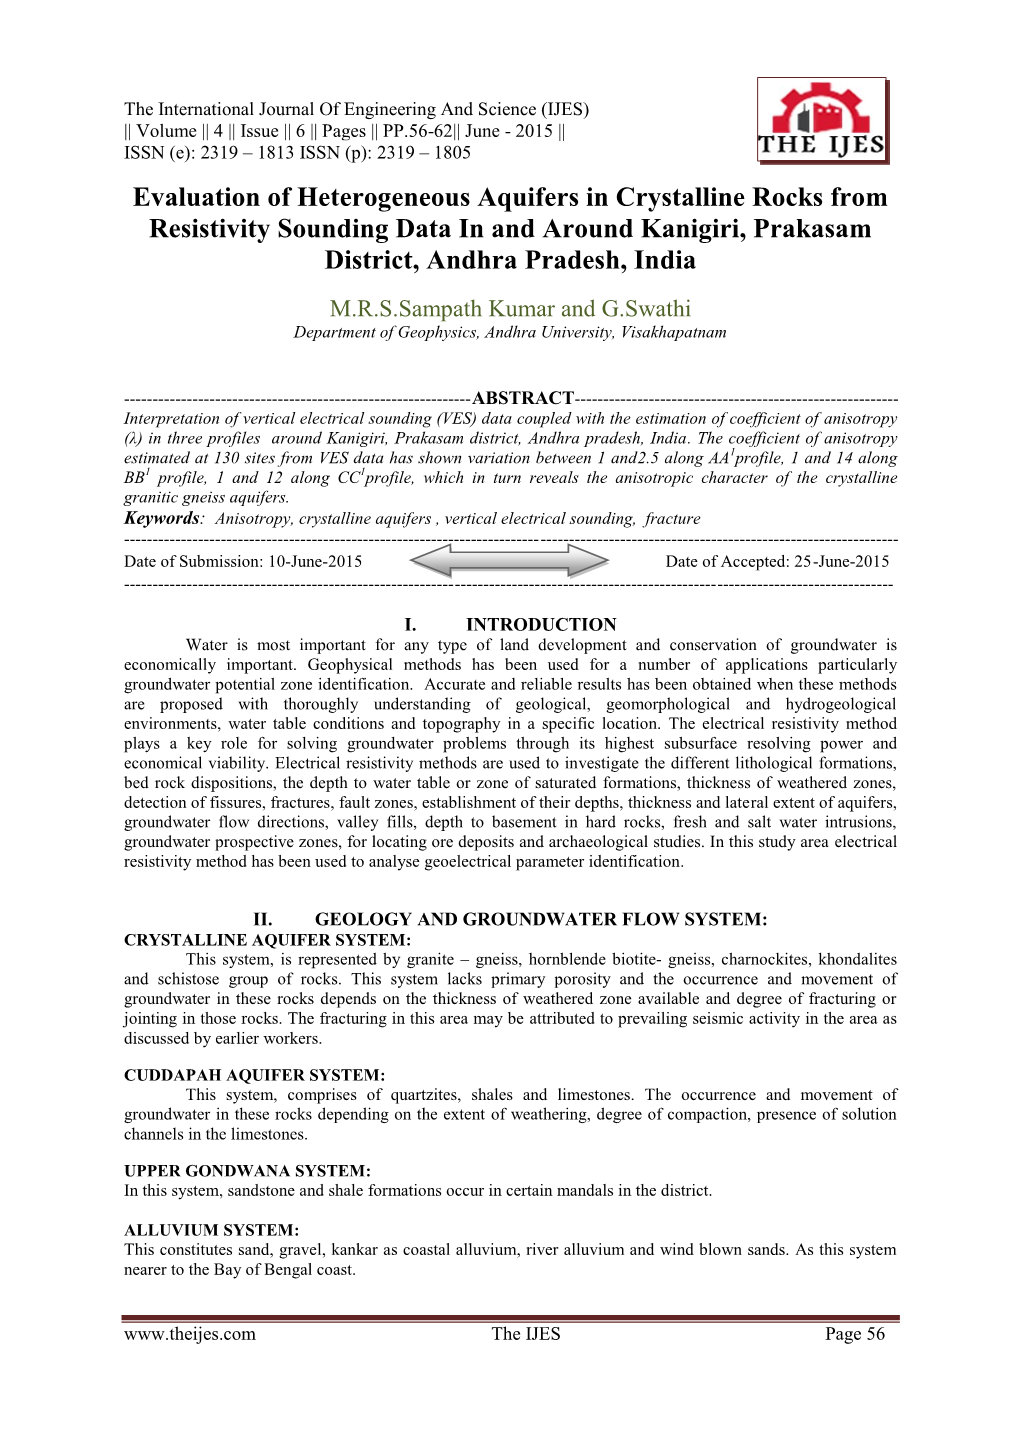 Evaluation of Heterogeneous Aquifers in Crystalline Rocks from Resistivity Sounding Data in and Around Kanigiri, Prakasam District, Andhra Pradesh, India